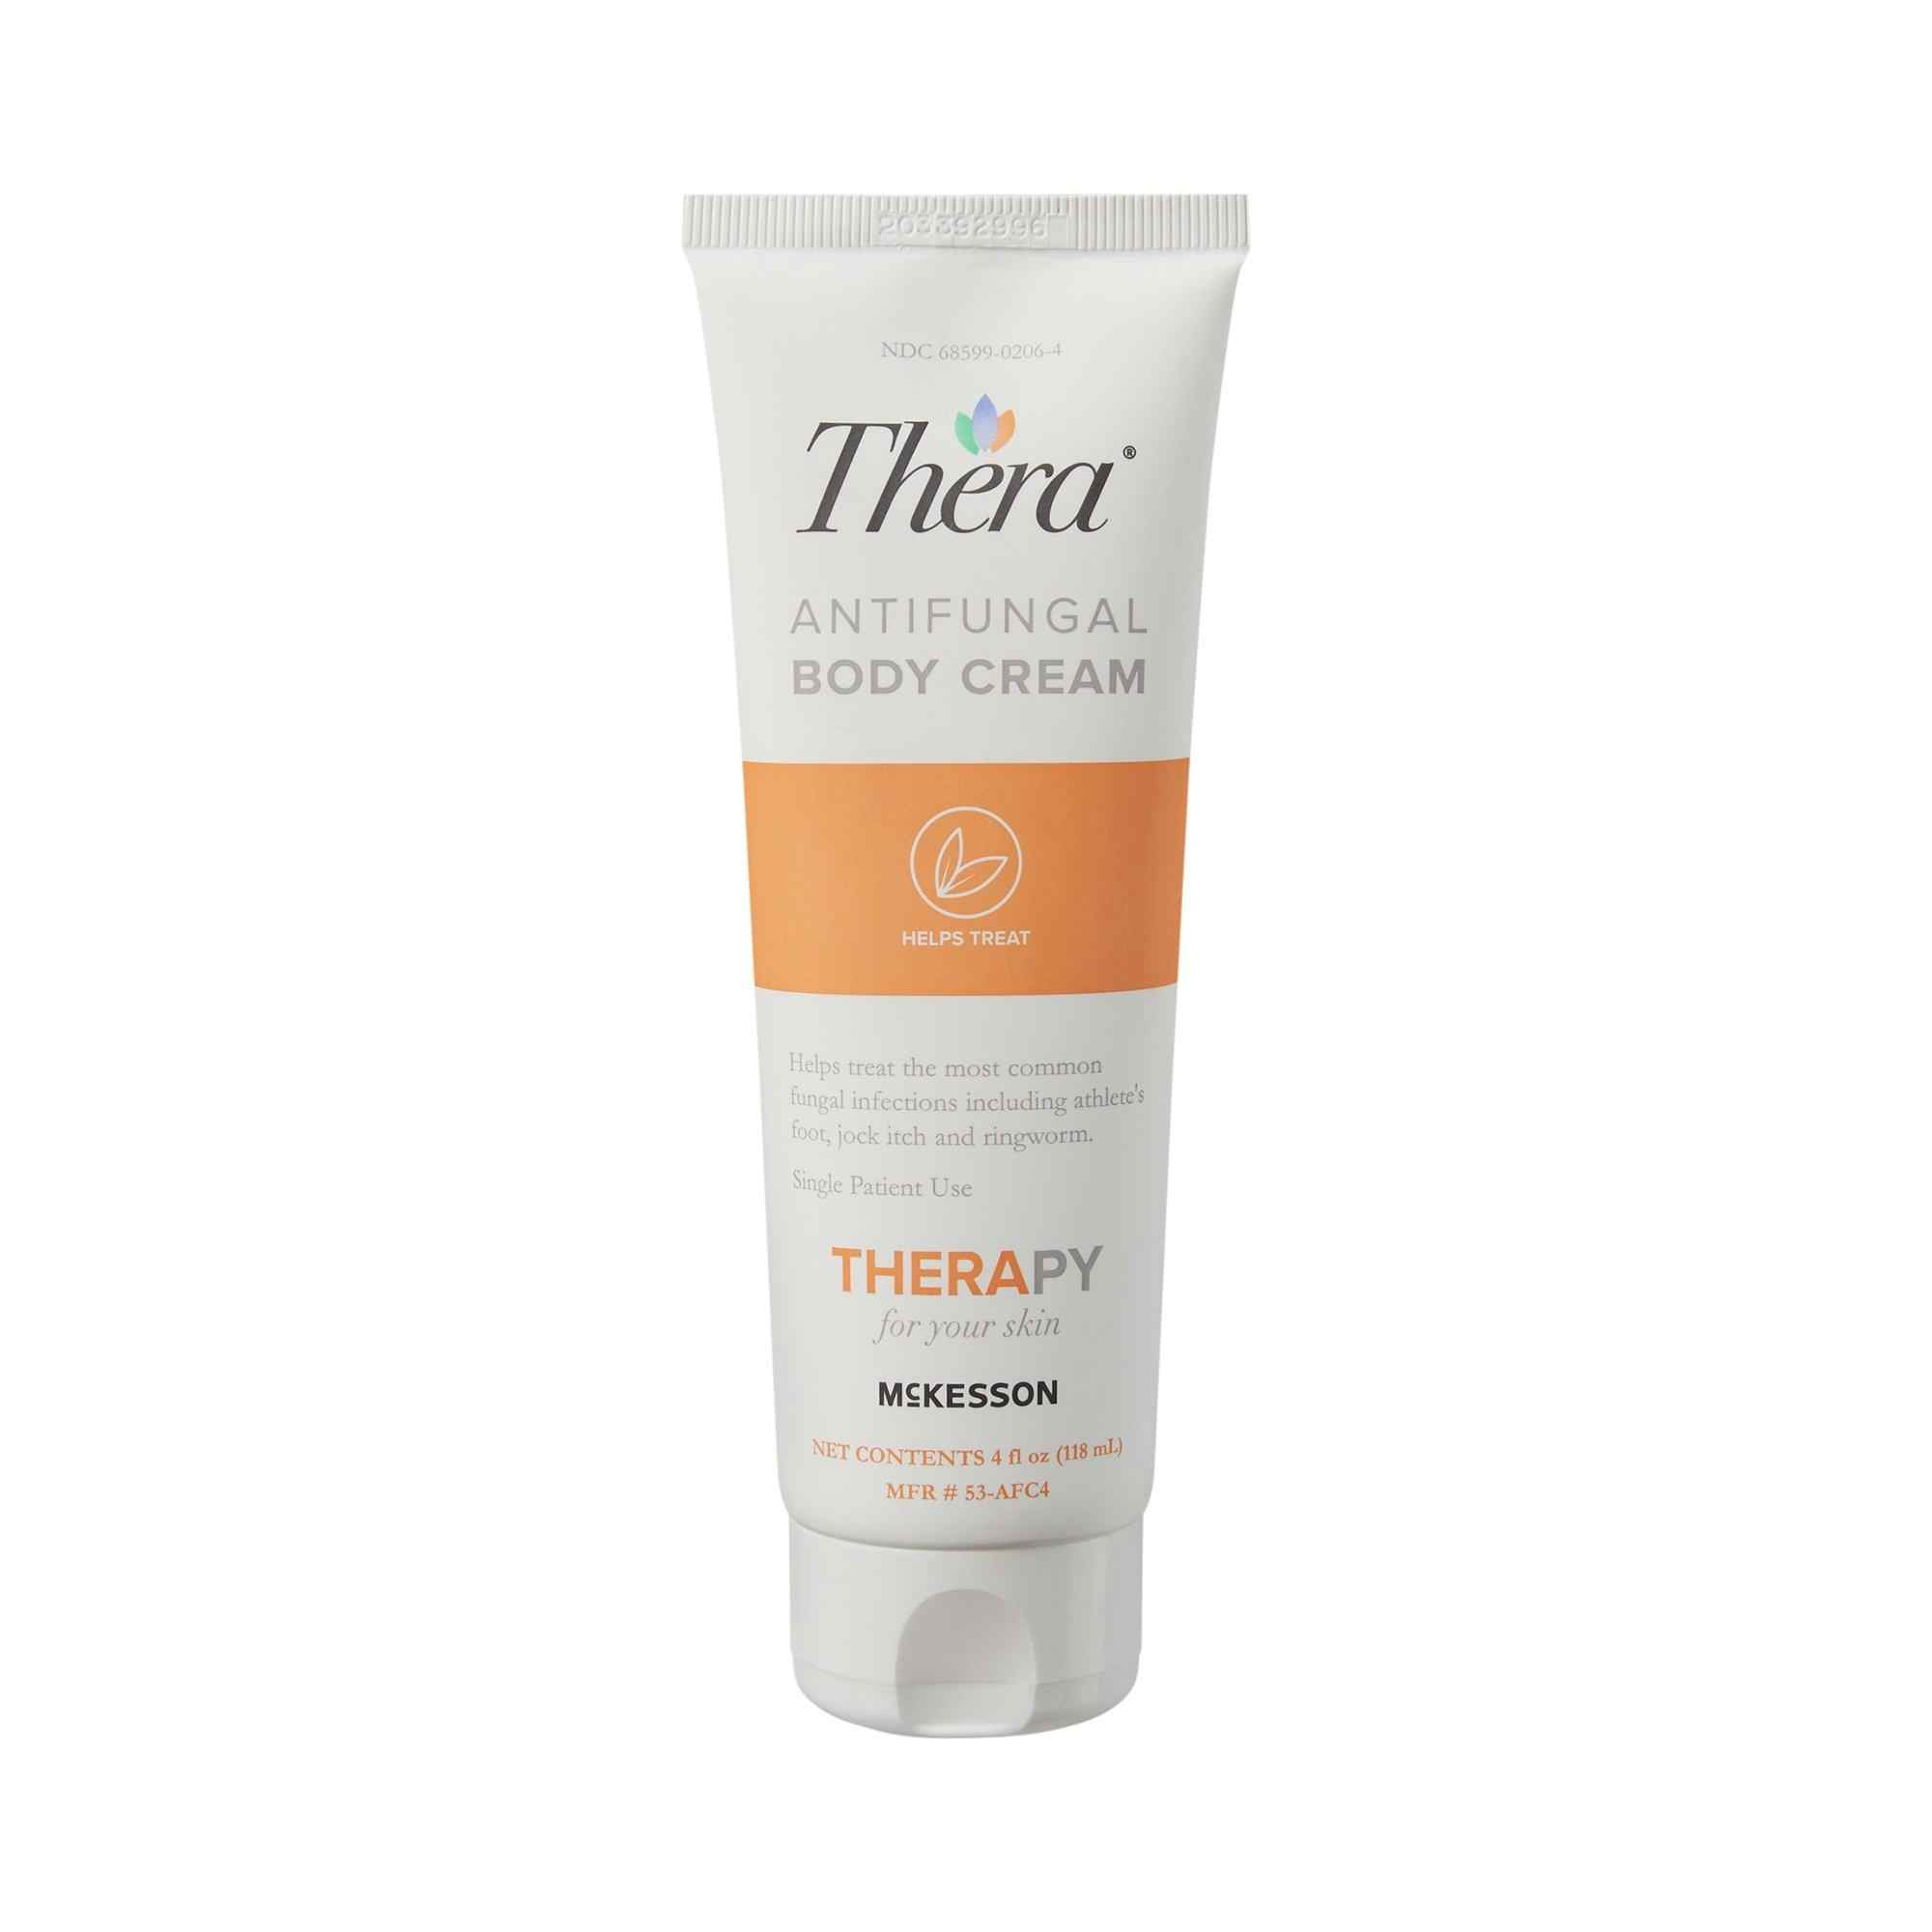 Thera Antifungal Body Cream, 4 oz.